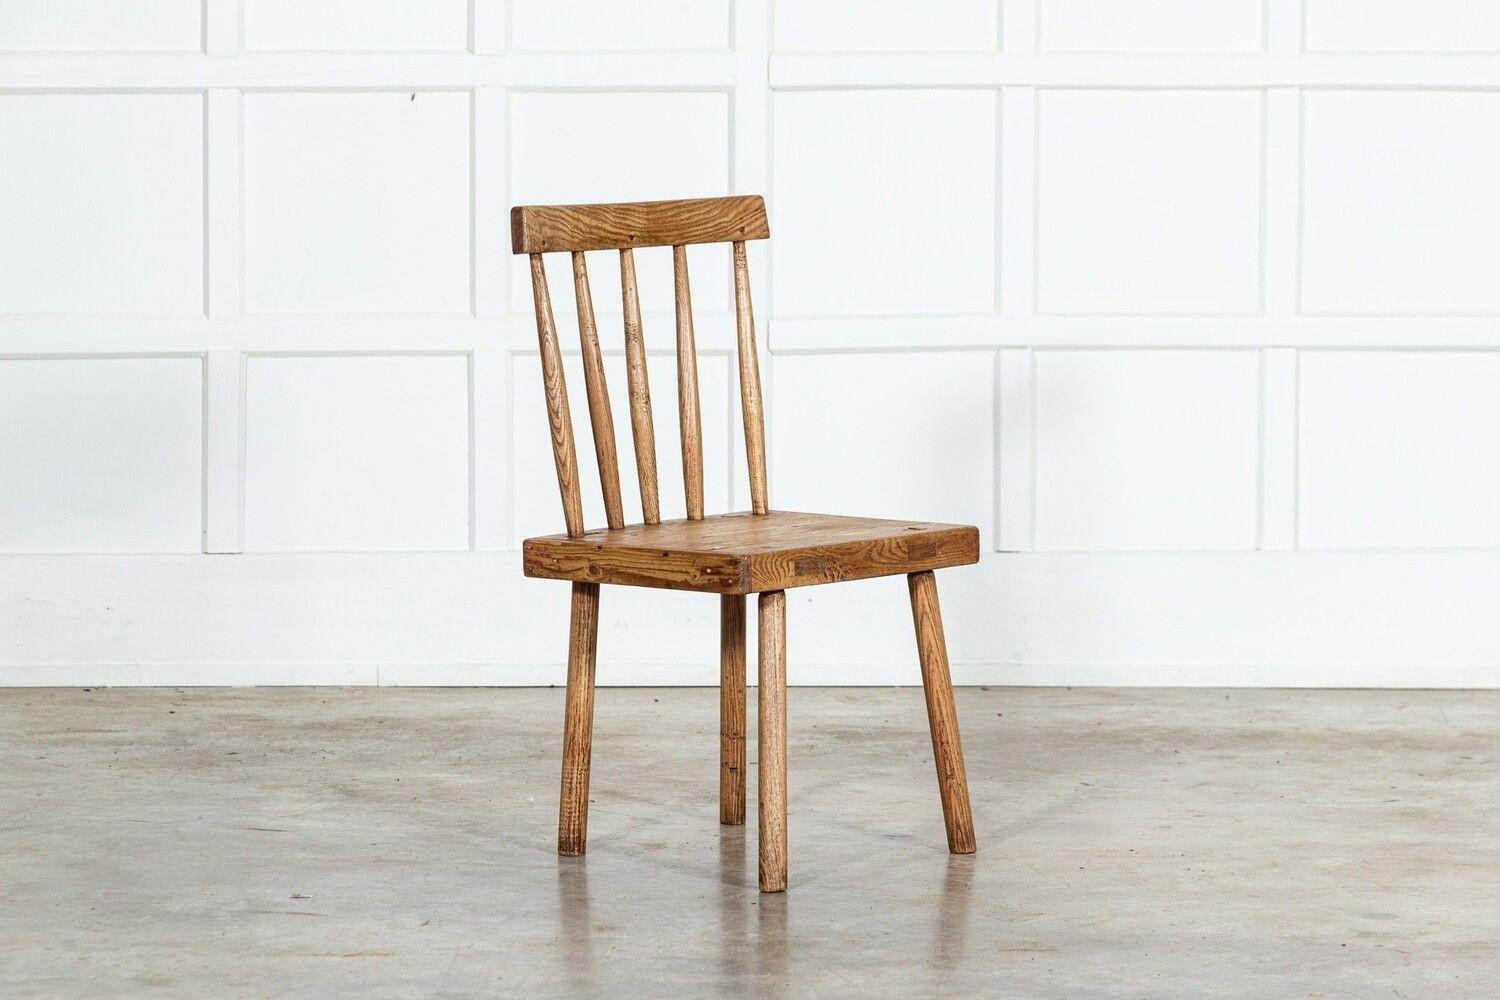 circa 1850
19thC Irish Ash & Elm VernacularHedge Chair
sku 1622
W44 x D38 x H81 cm
Seat height 41 cm